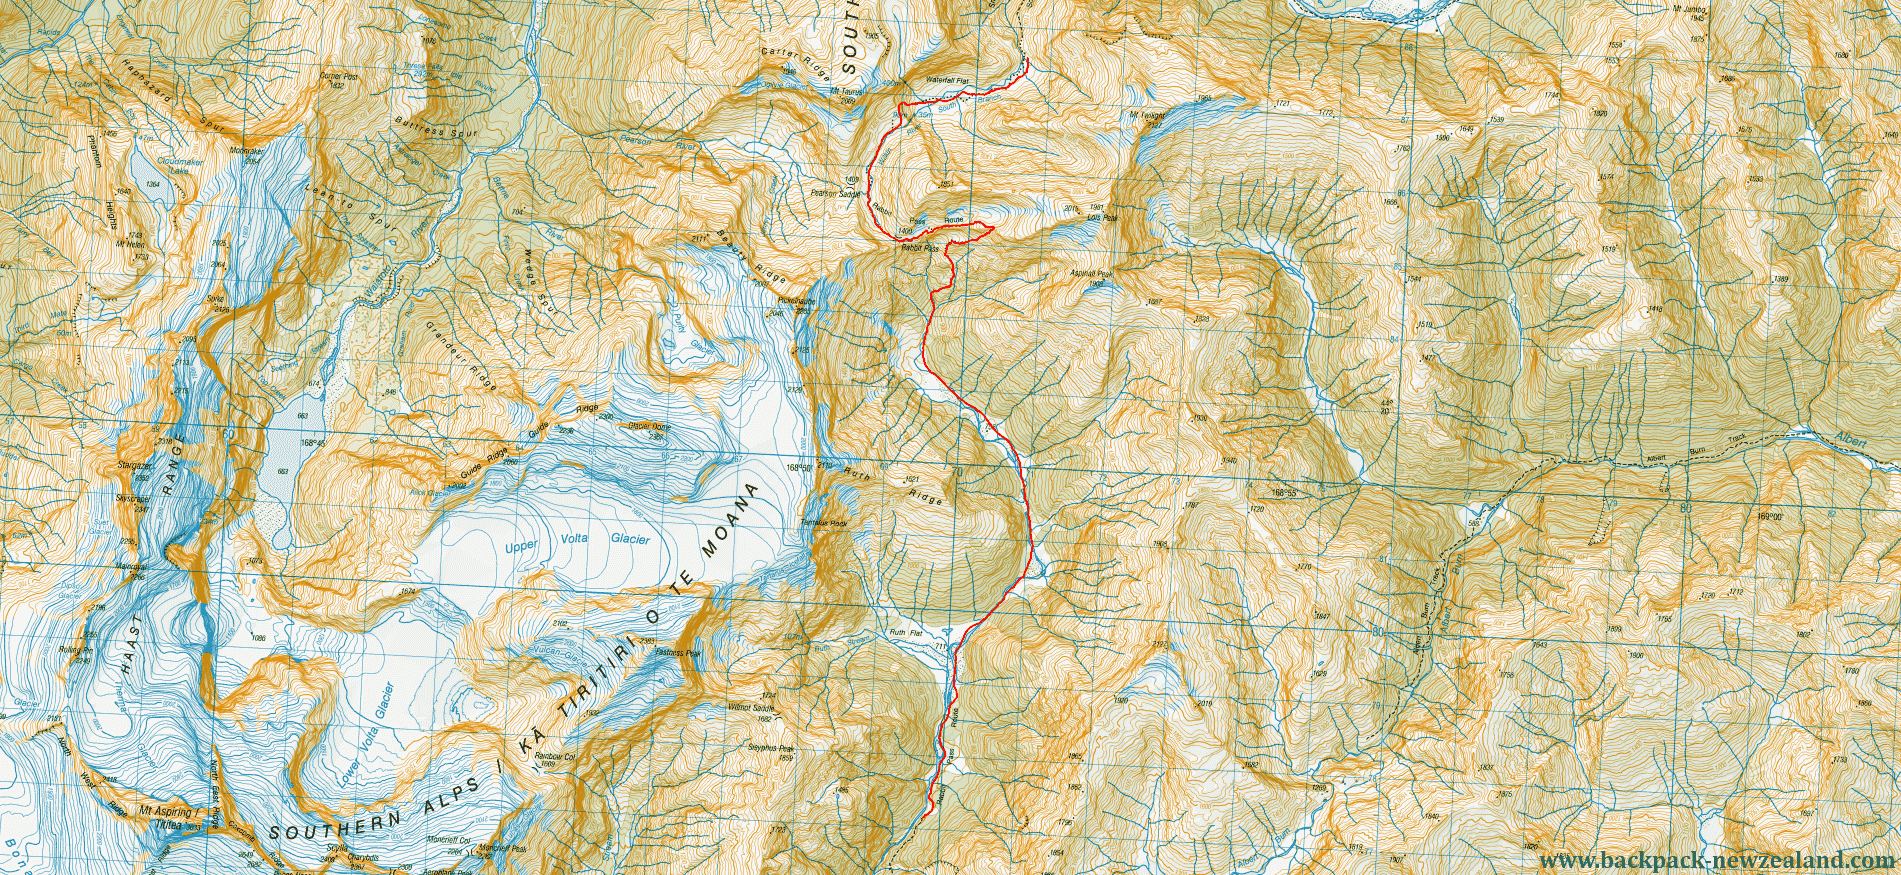 Upper E Matukituki /Rabbit Pass Route Map - New Zealand Tracks